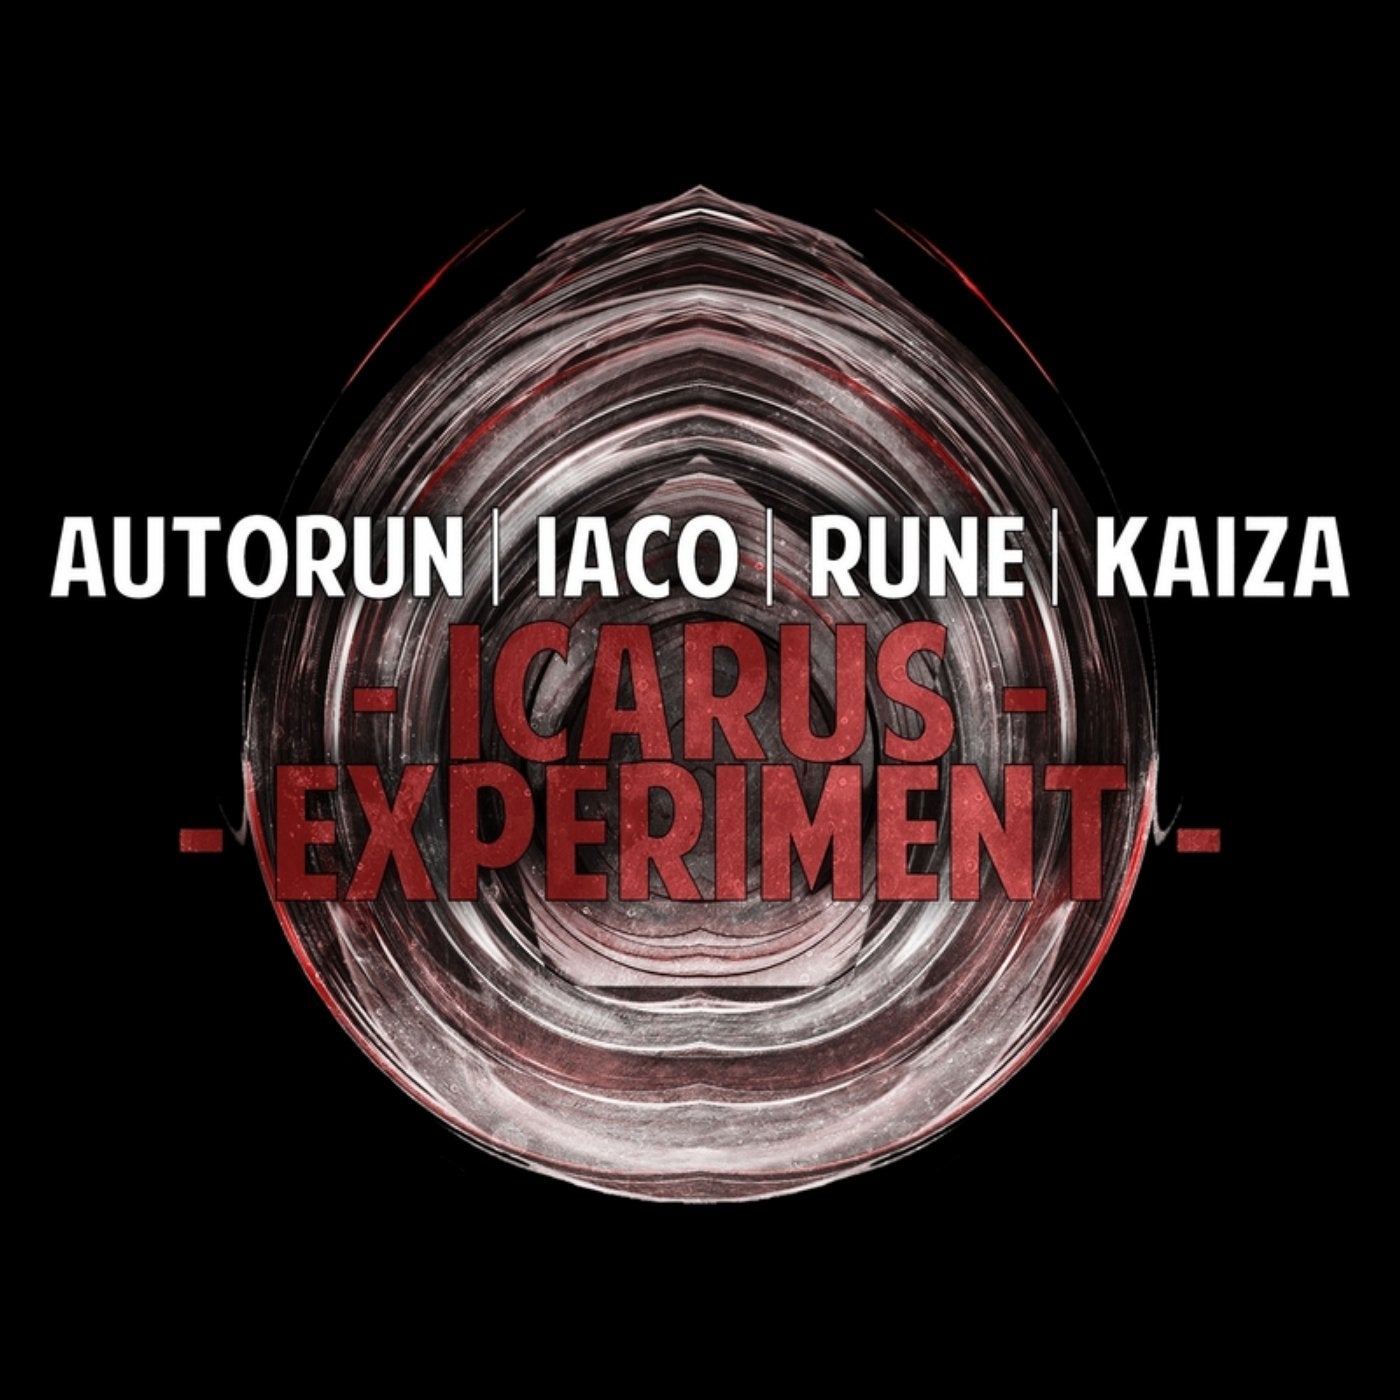 Icarus/Experiment